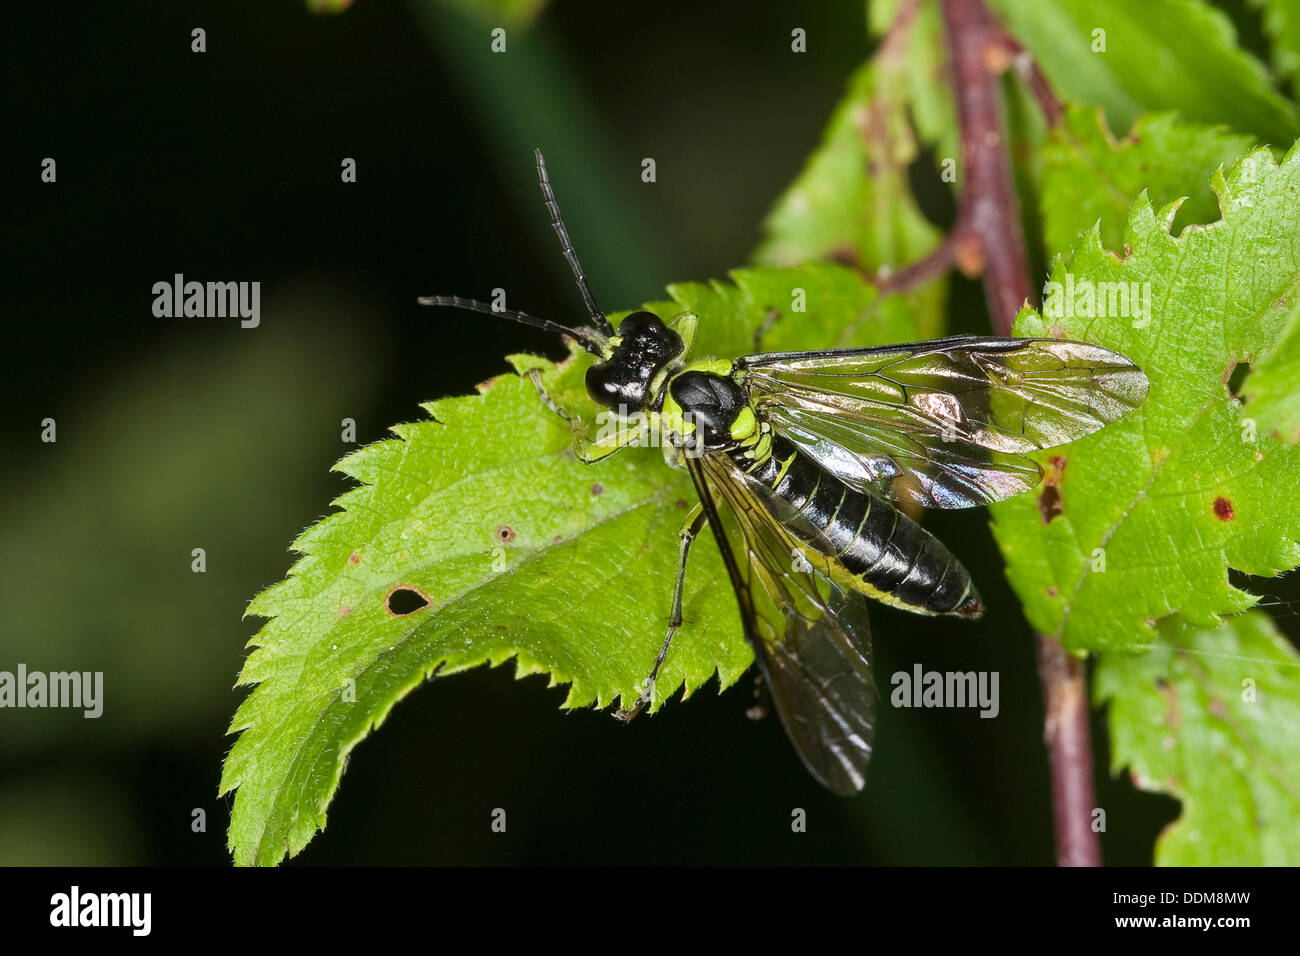 Sawfly, Saw-fly, Blattwespe, Echte Blattwespe, Grünschwarze Blattwespe, Tenthredo mesomela, Eurogaster mesomela Stock Photo